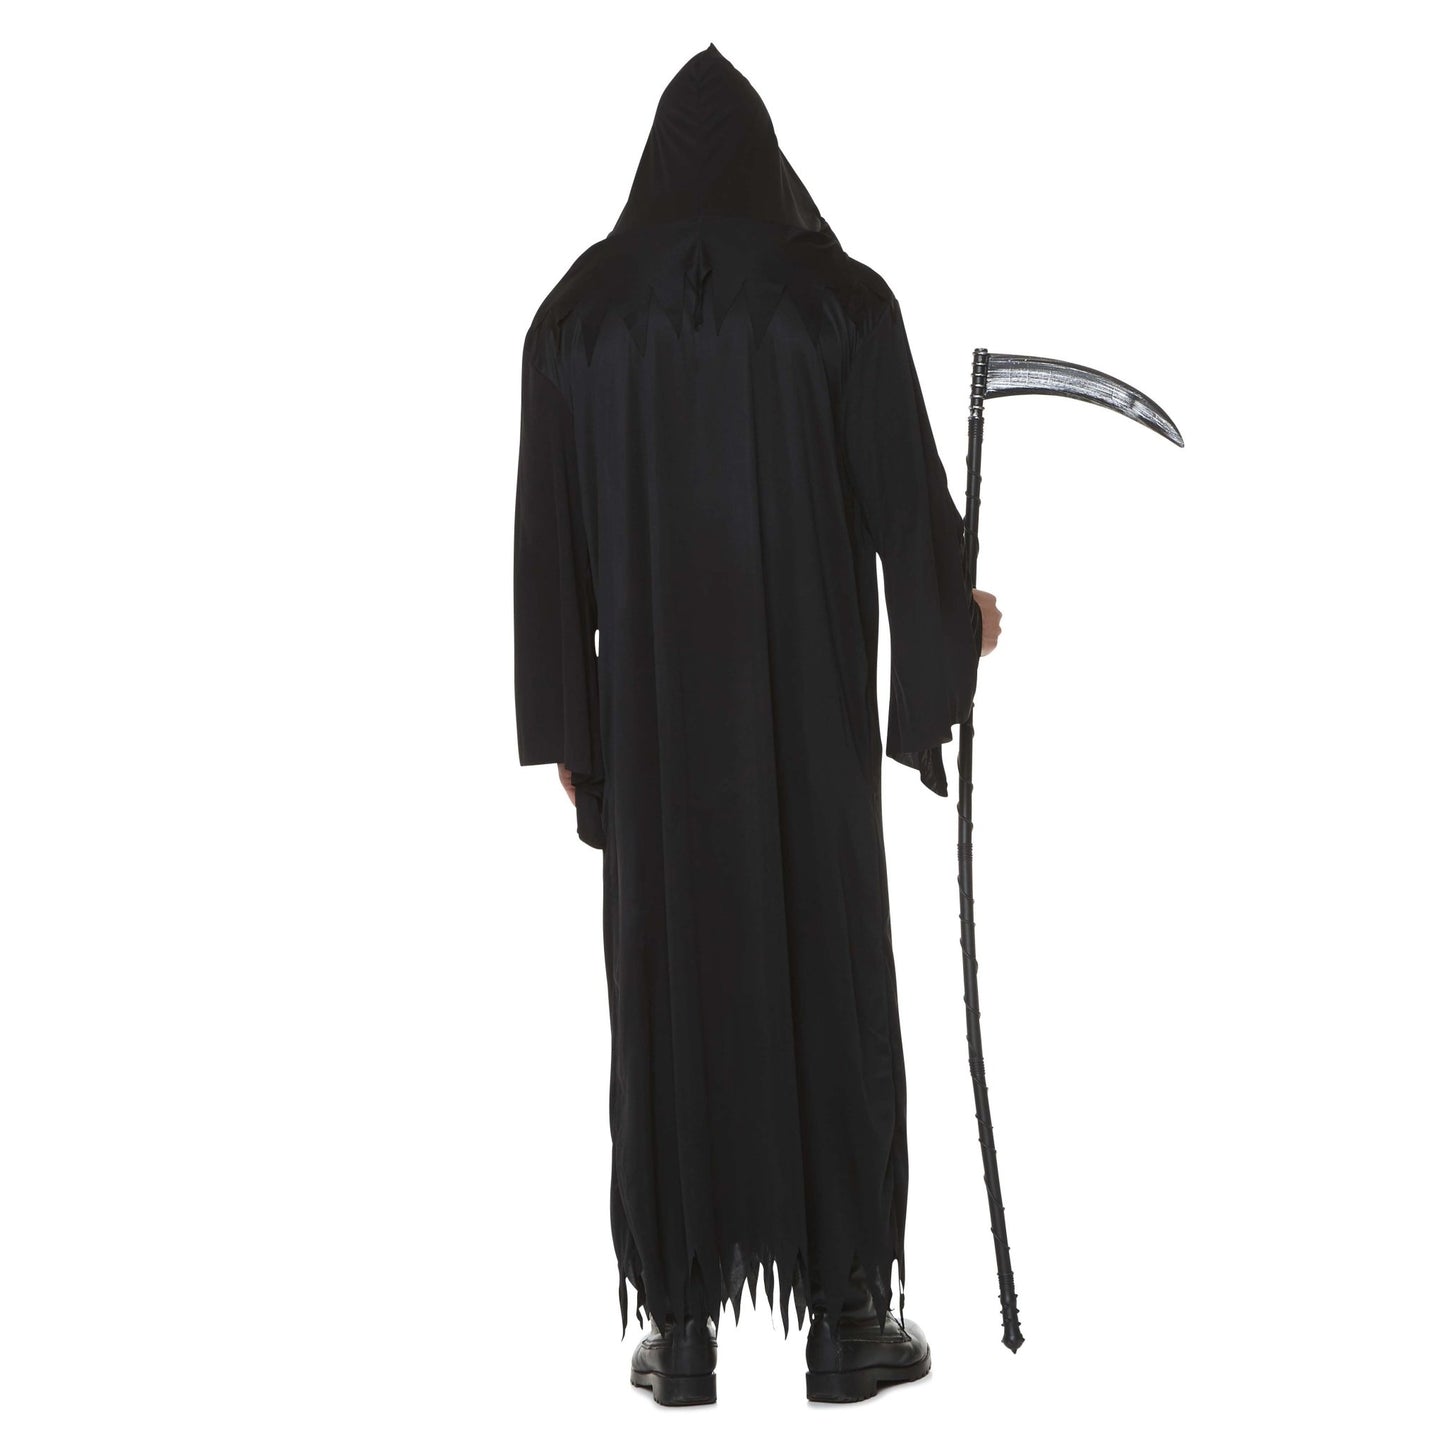 Grim Reaper Costume – Party Australia